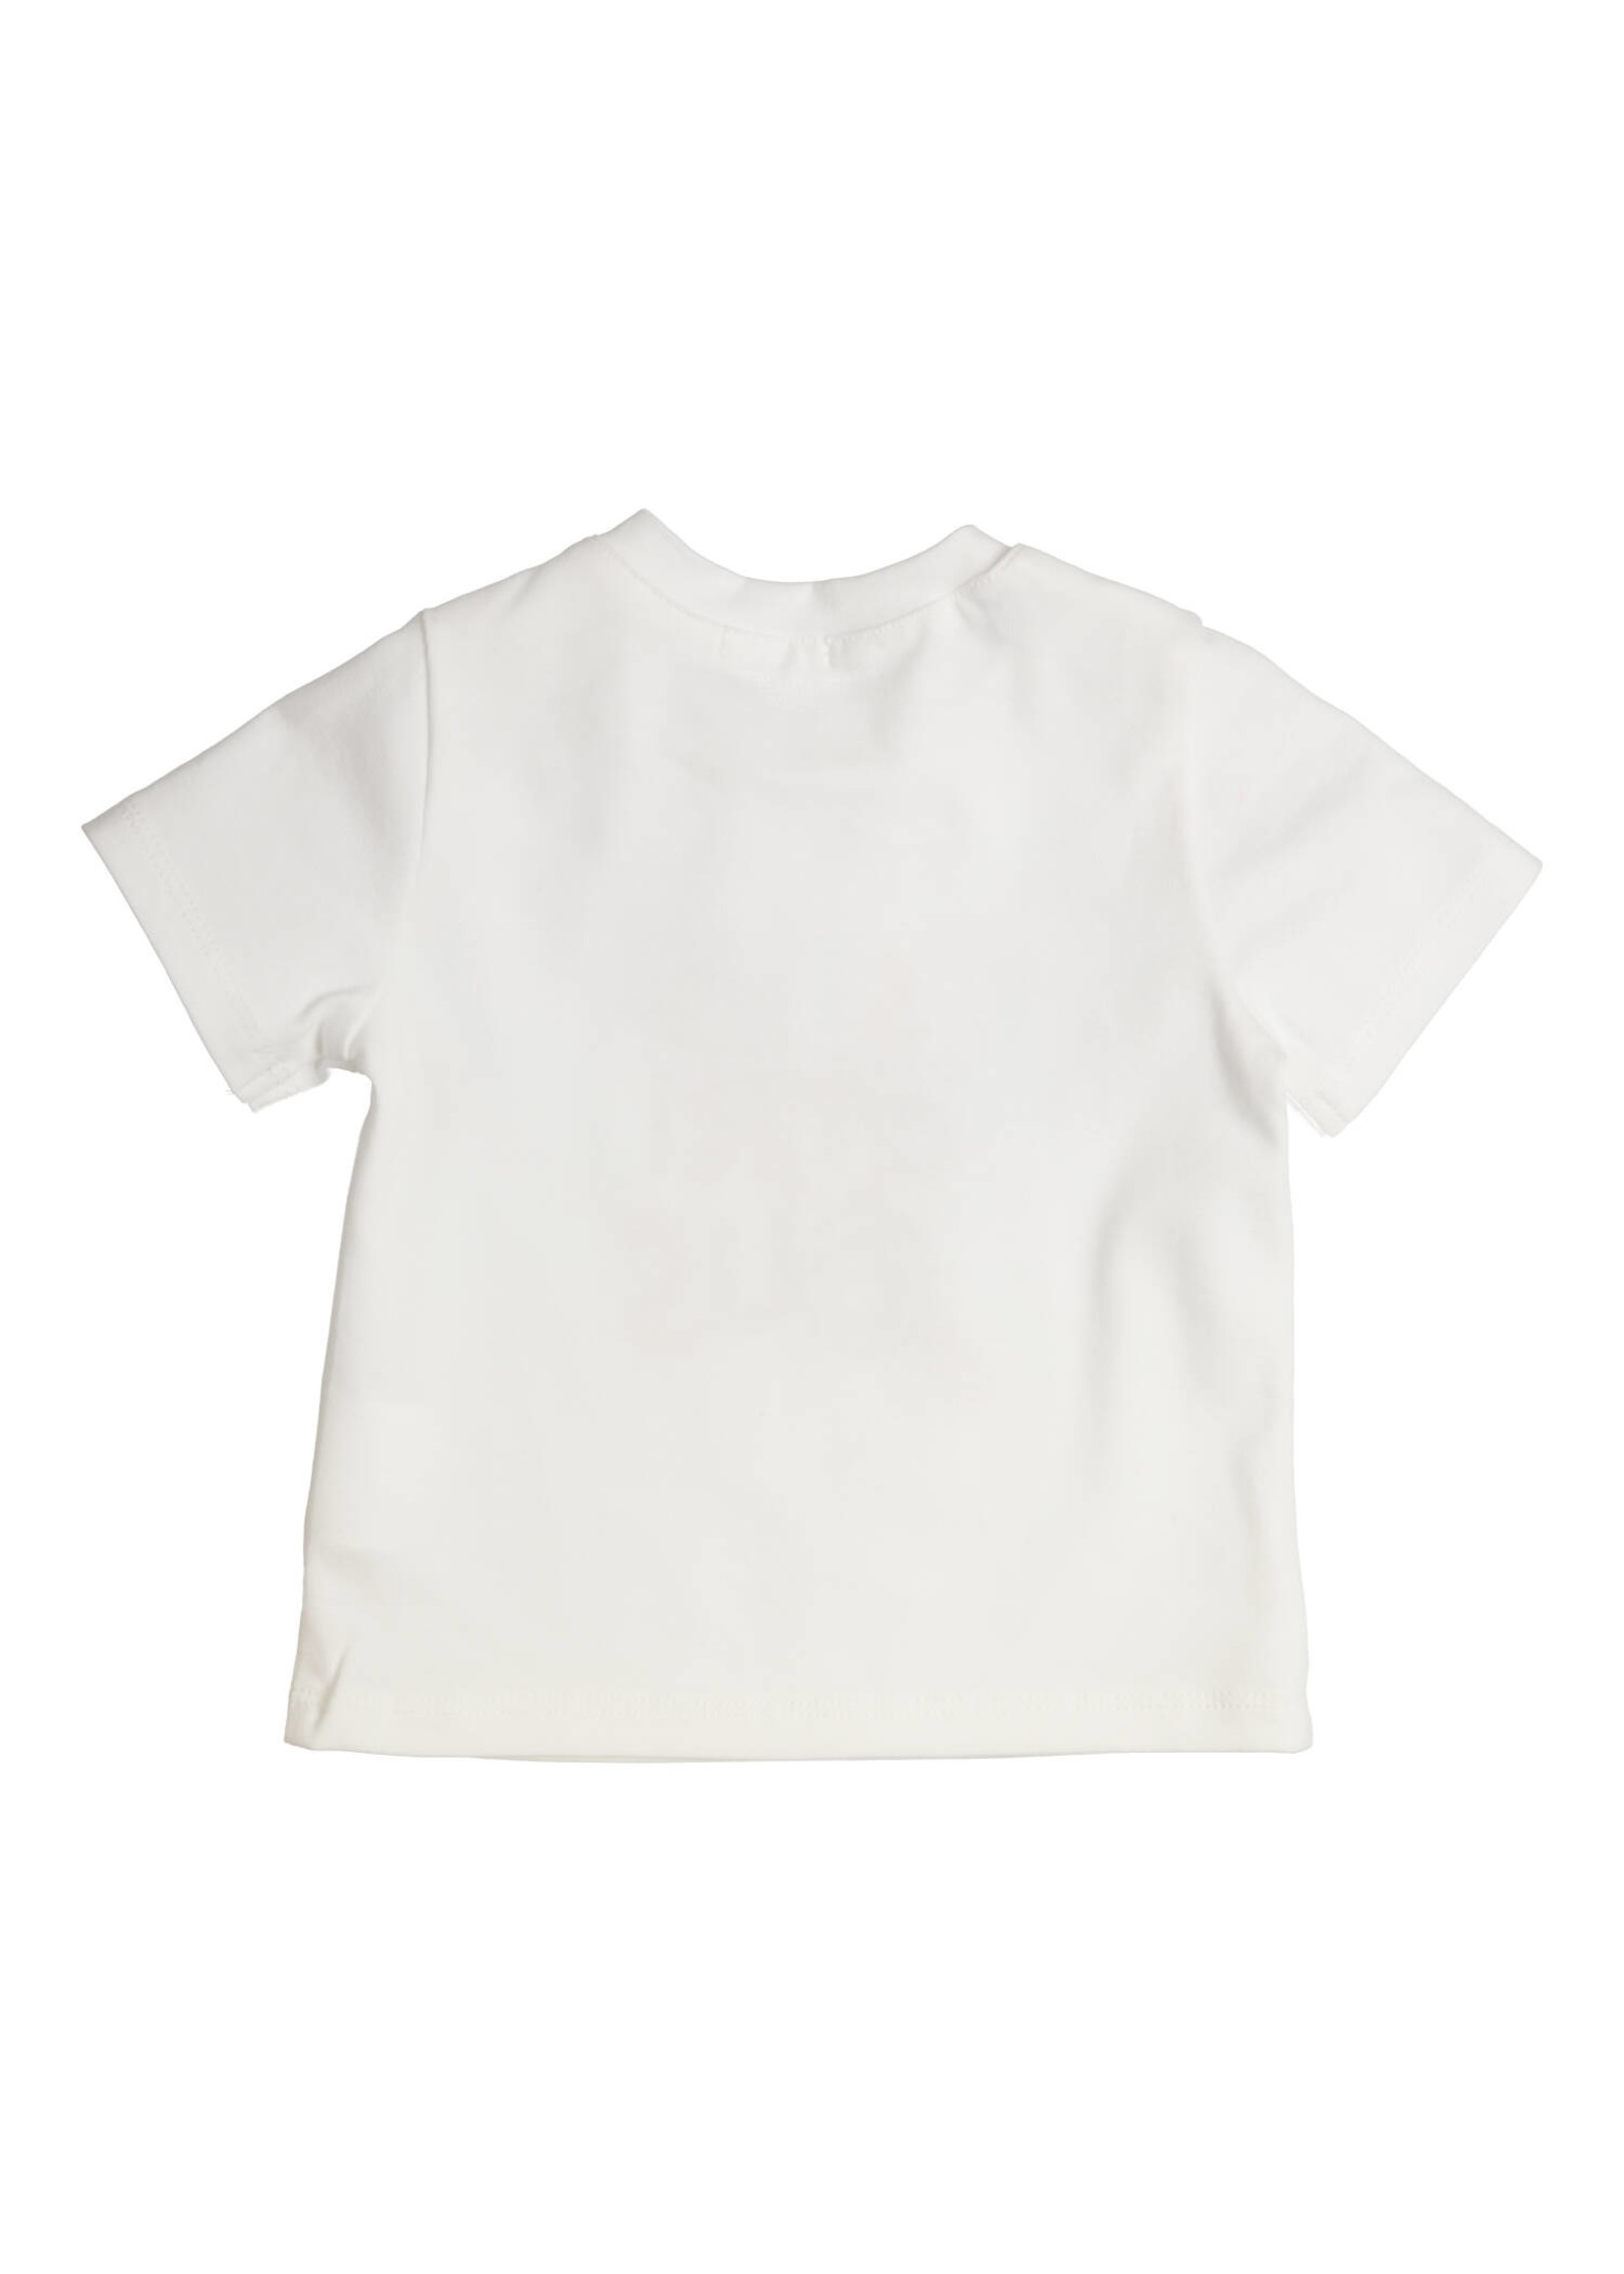 Gymp T-shirt Aerobic White 353-3331-20